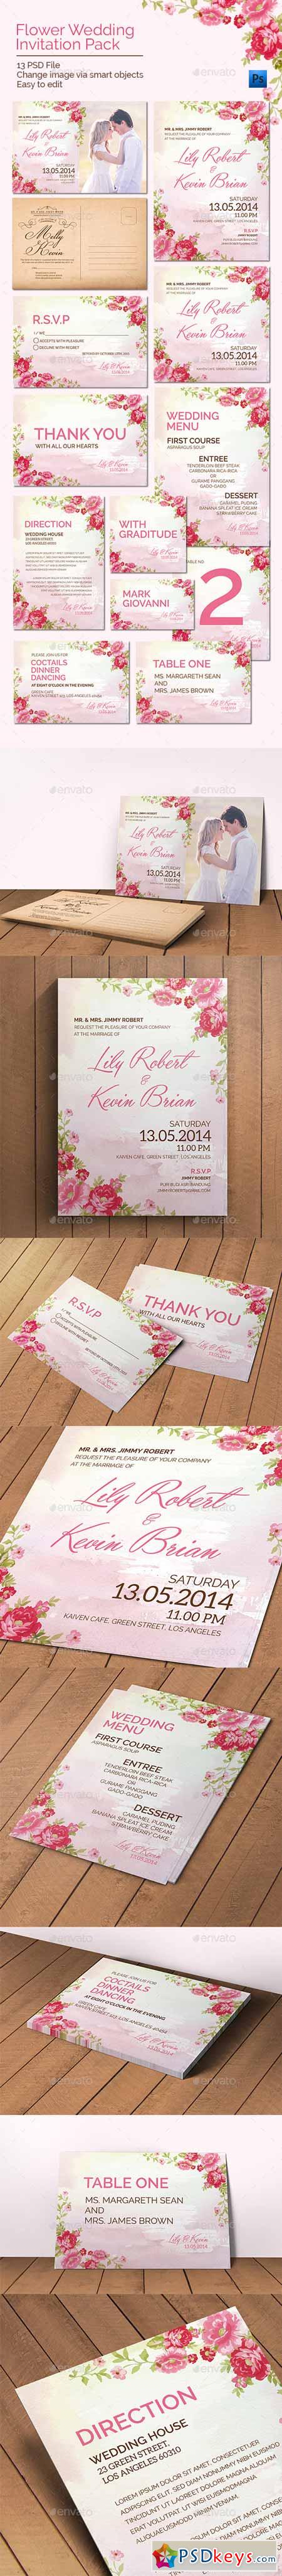 Flower Wedding Invitation Pack 11254563